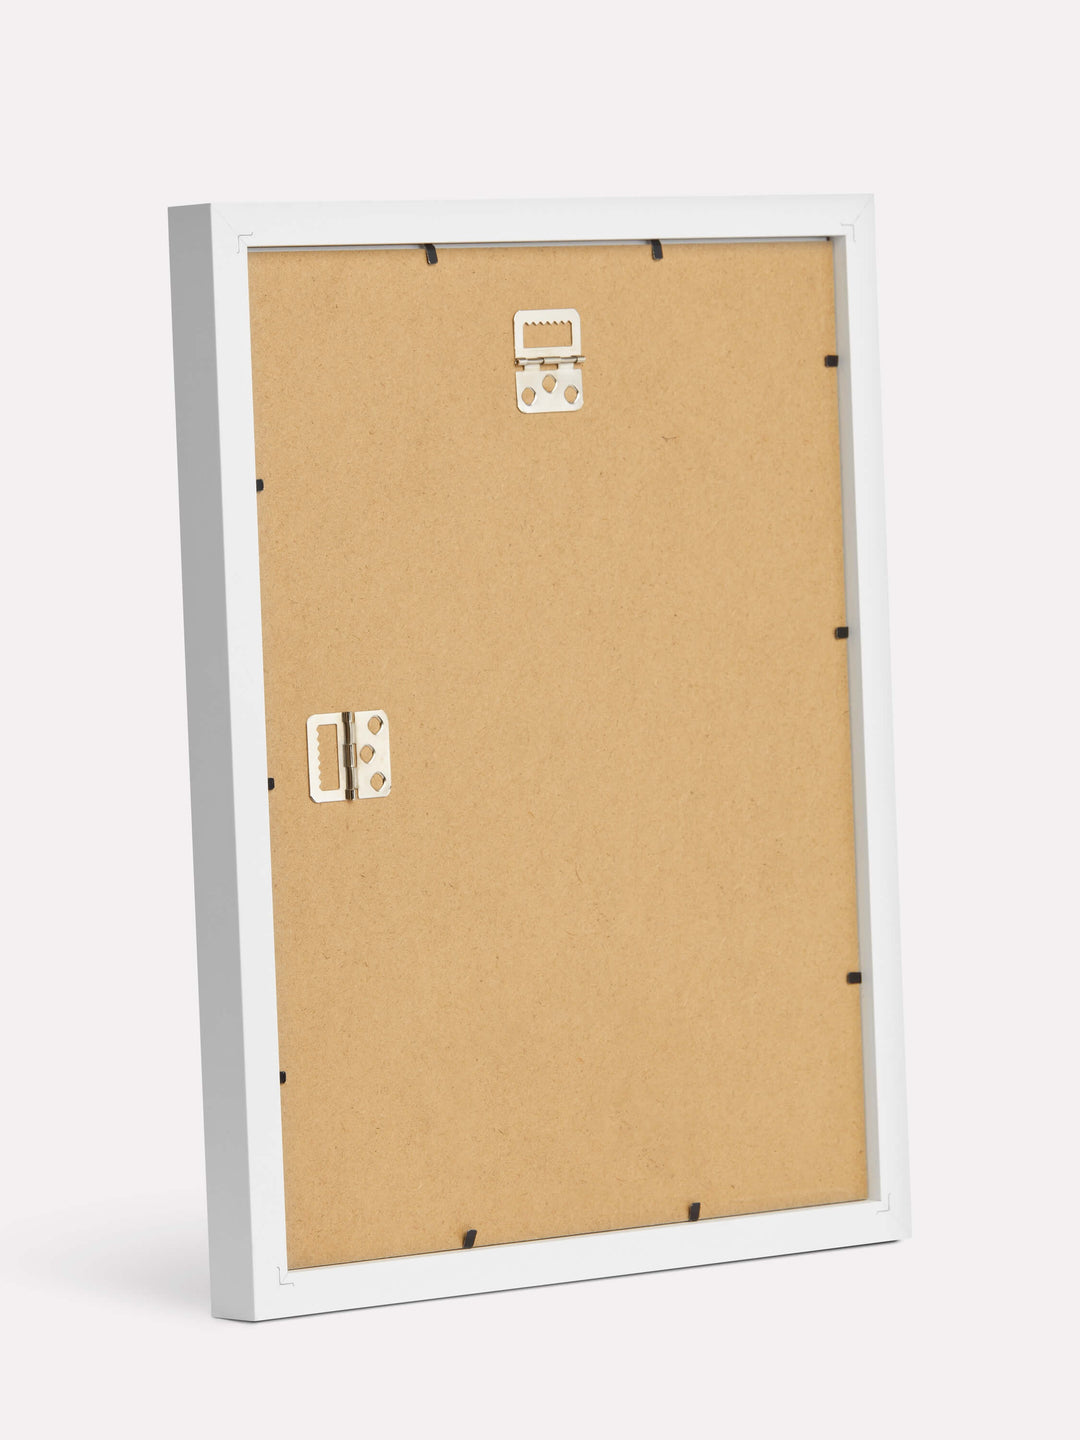 11x14-inch Beveled Frame, White - Back view